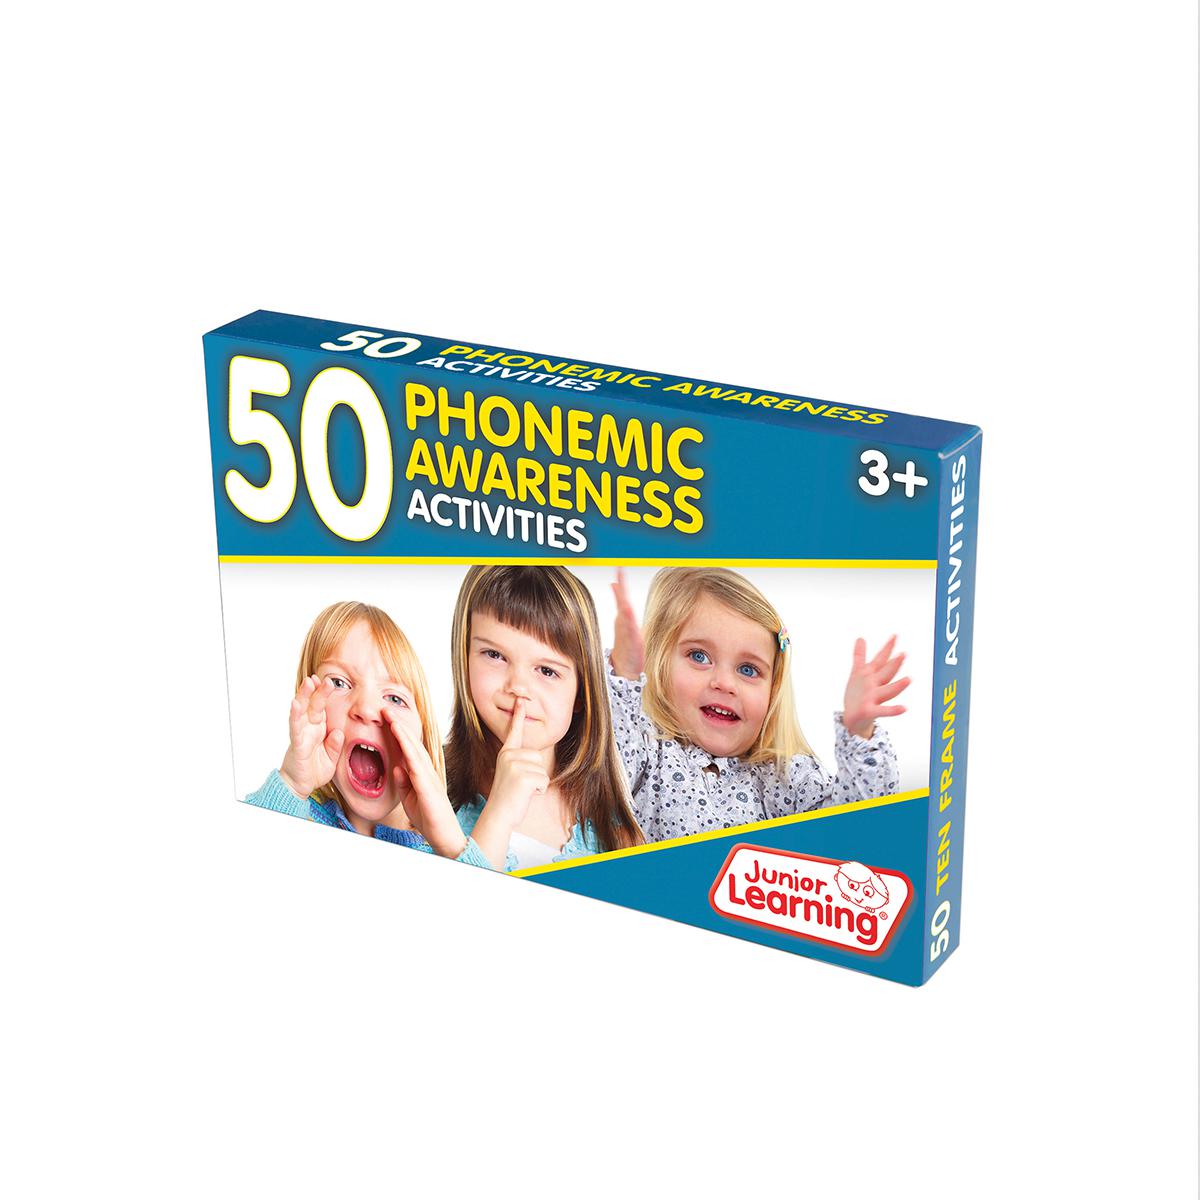  50 Phonemic Awareness Activities 